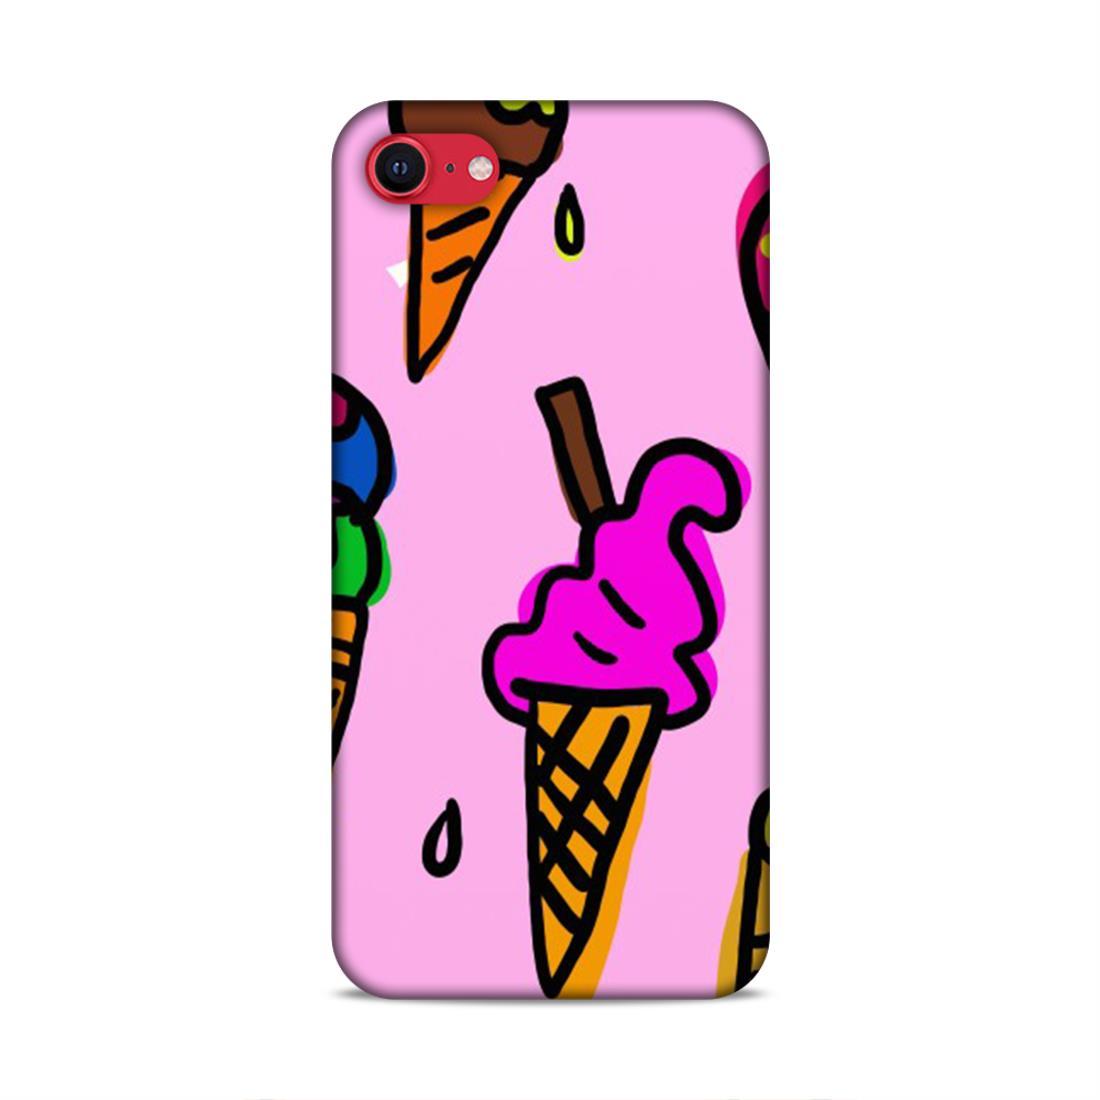 Icecream Pink iPhone SE 2020 Phone Cover